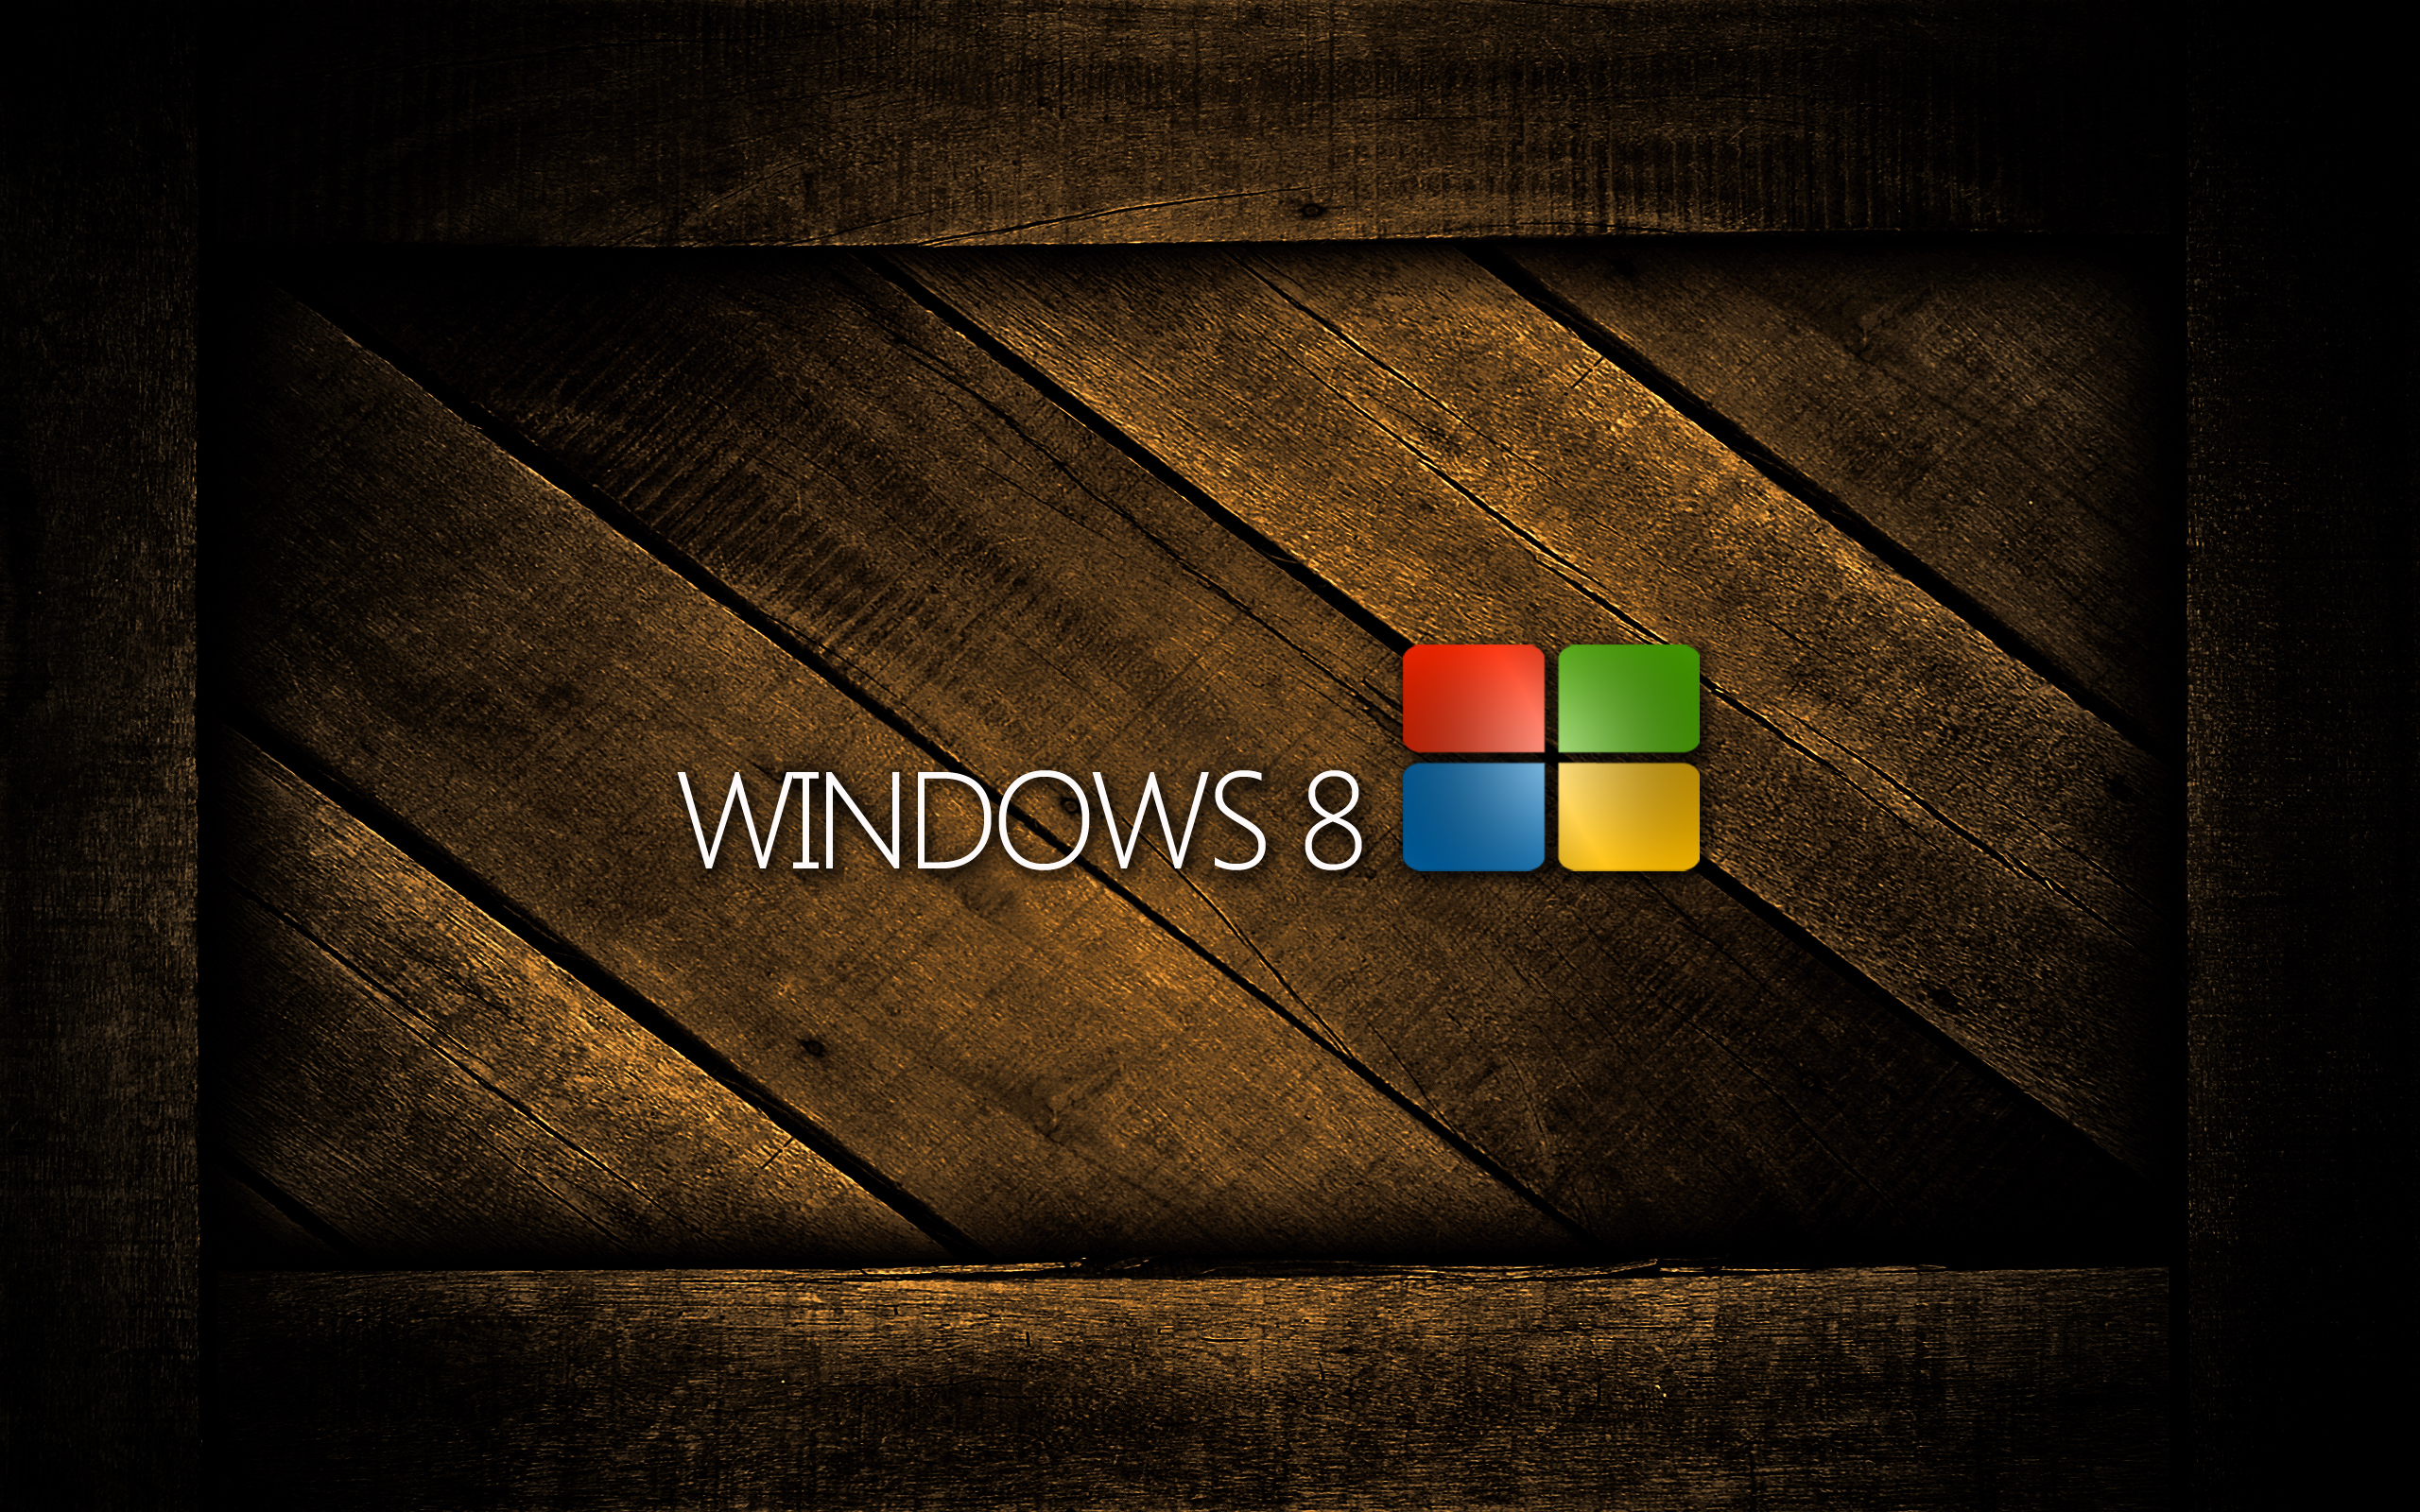 Microsoft Windows Wallpaper Pack Techmynd